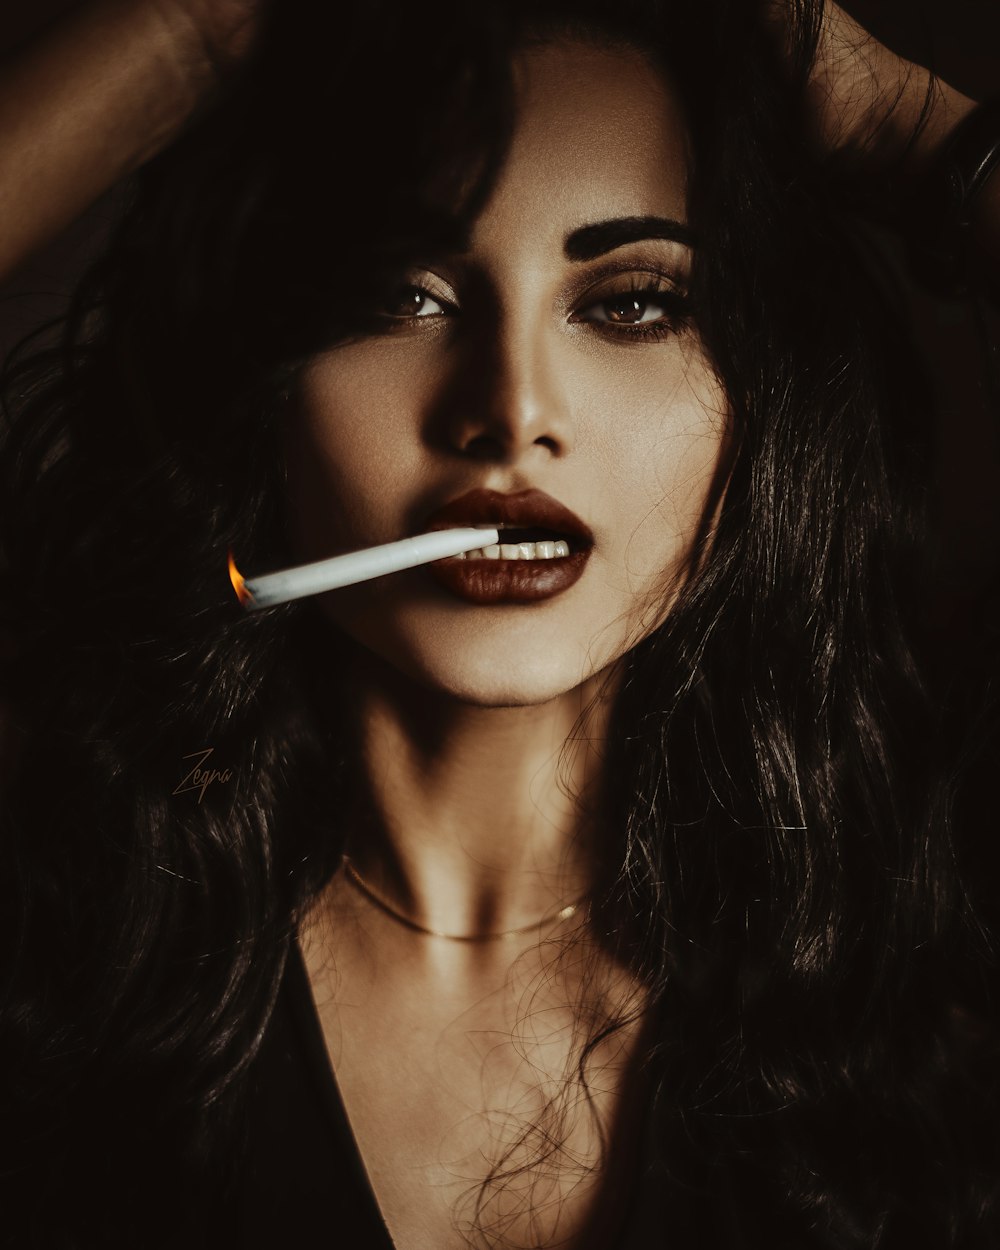 Frau mit rotem Lippenstift hält Zigarette